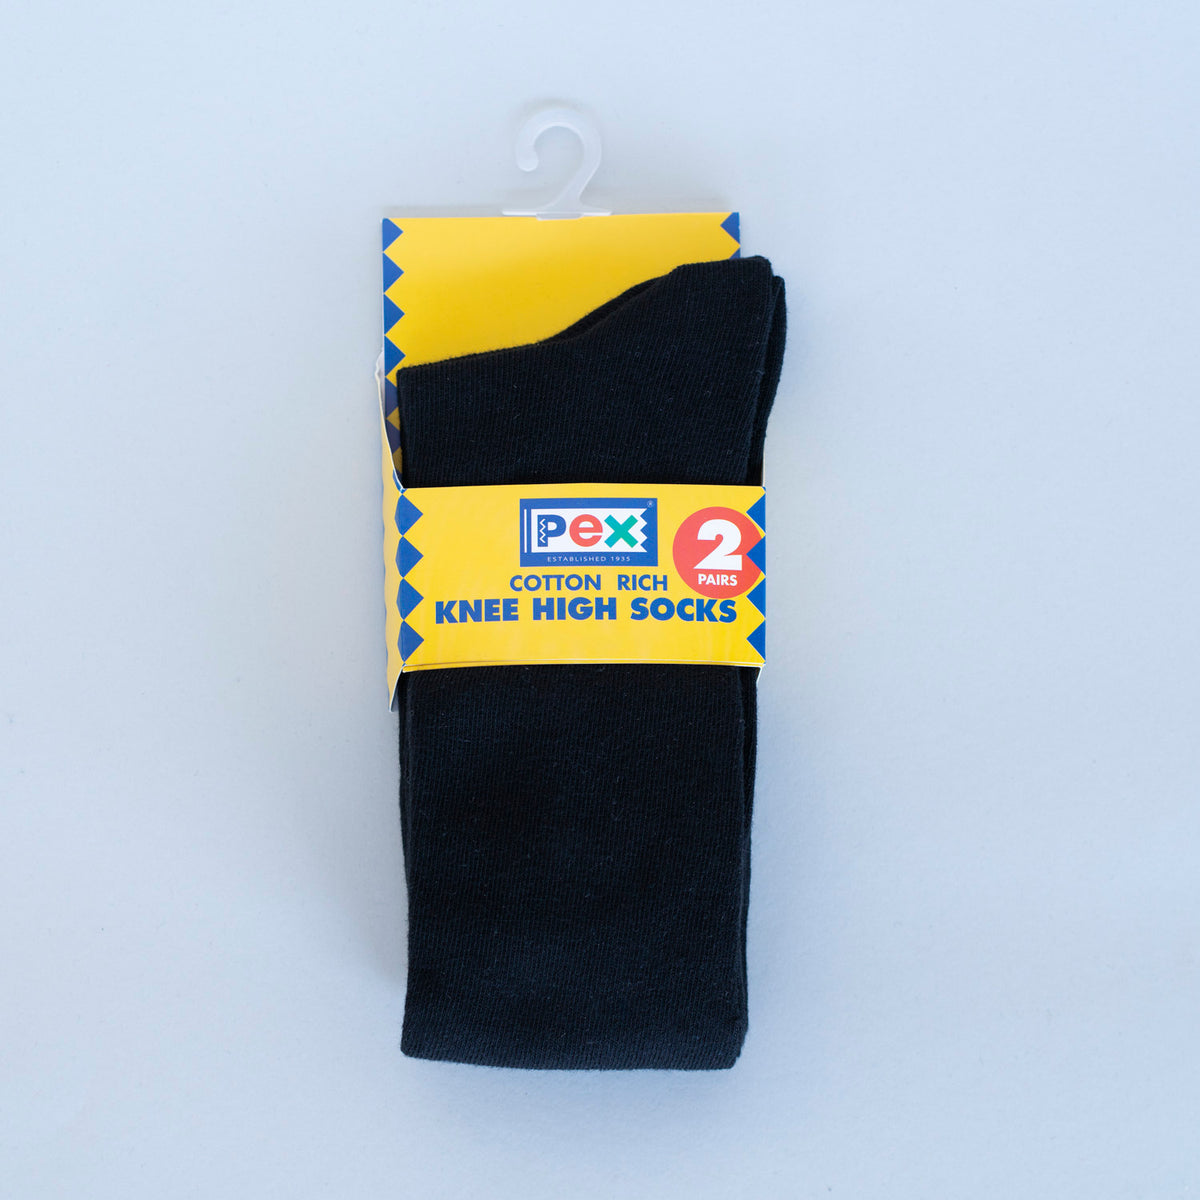 Graduate Socks 2 Pair Pack - Black